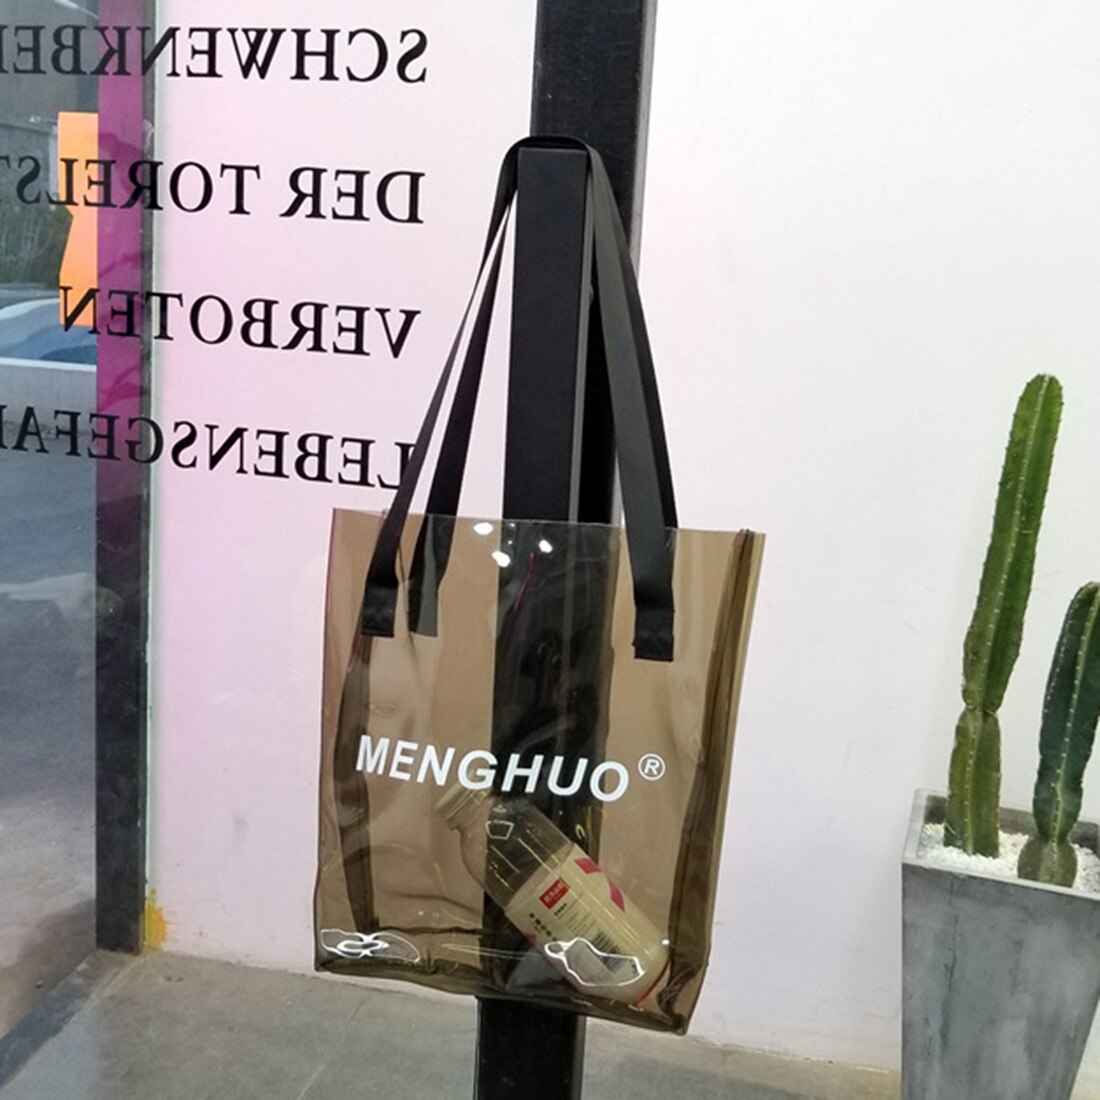 2018 fashion new PVC transparent letter "MENGHUO" jelly bag waterproof hand shoulder beach handbag - ebowsos